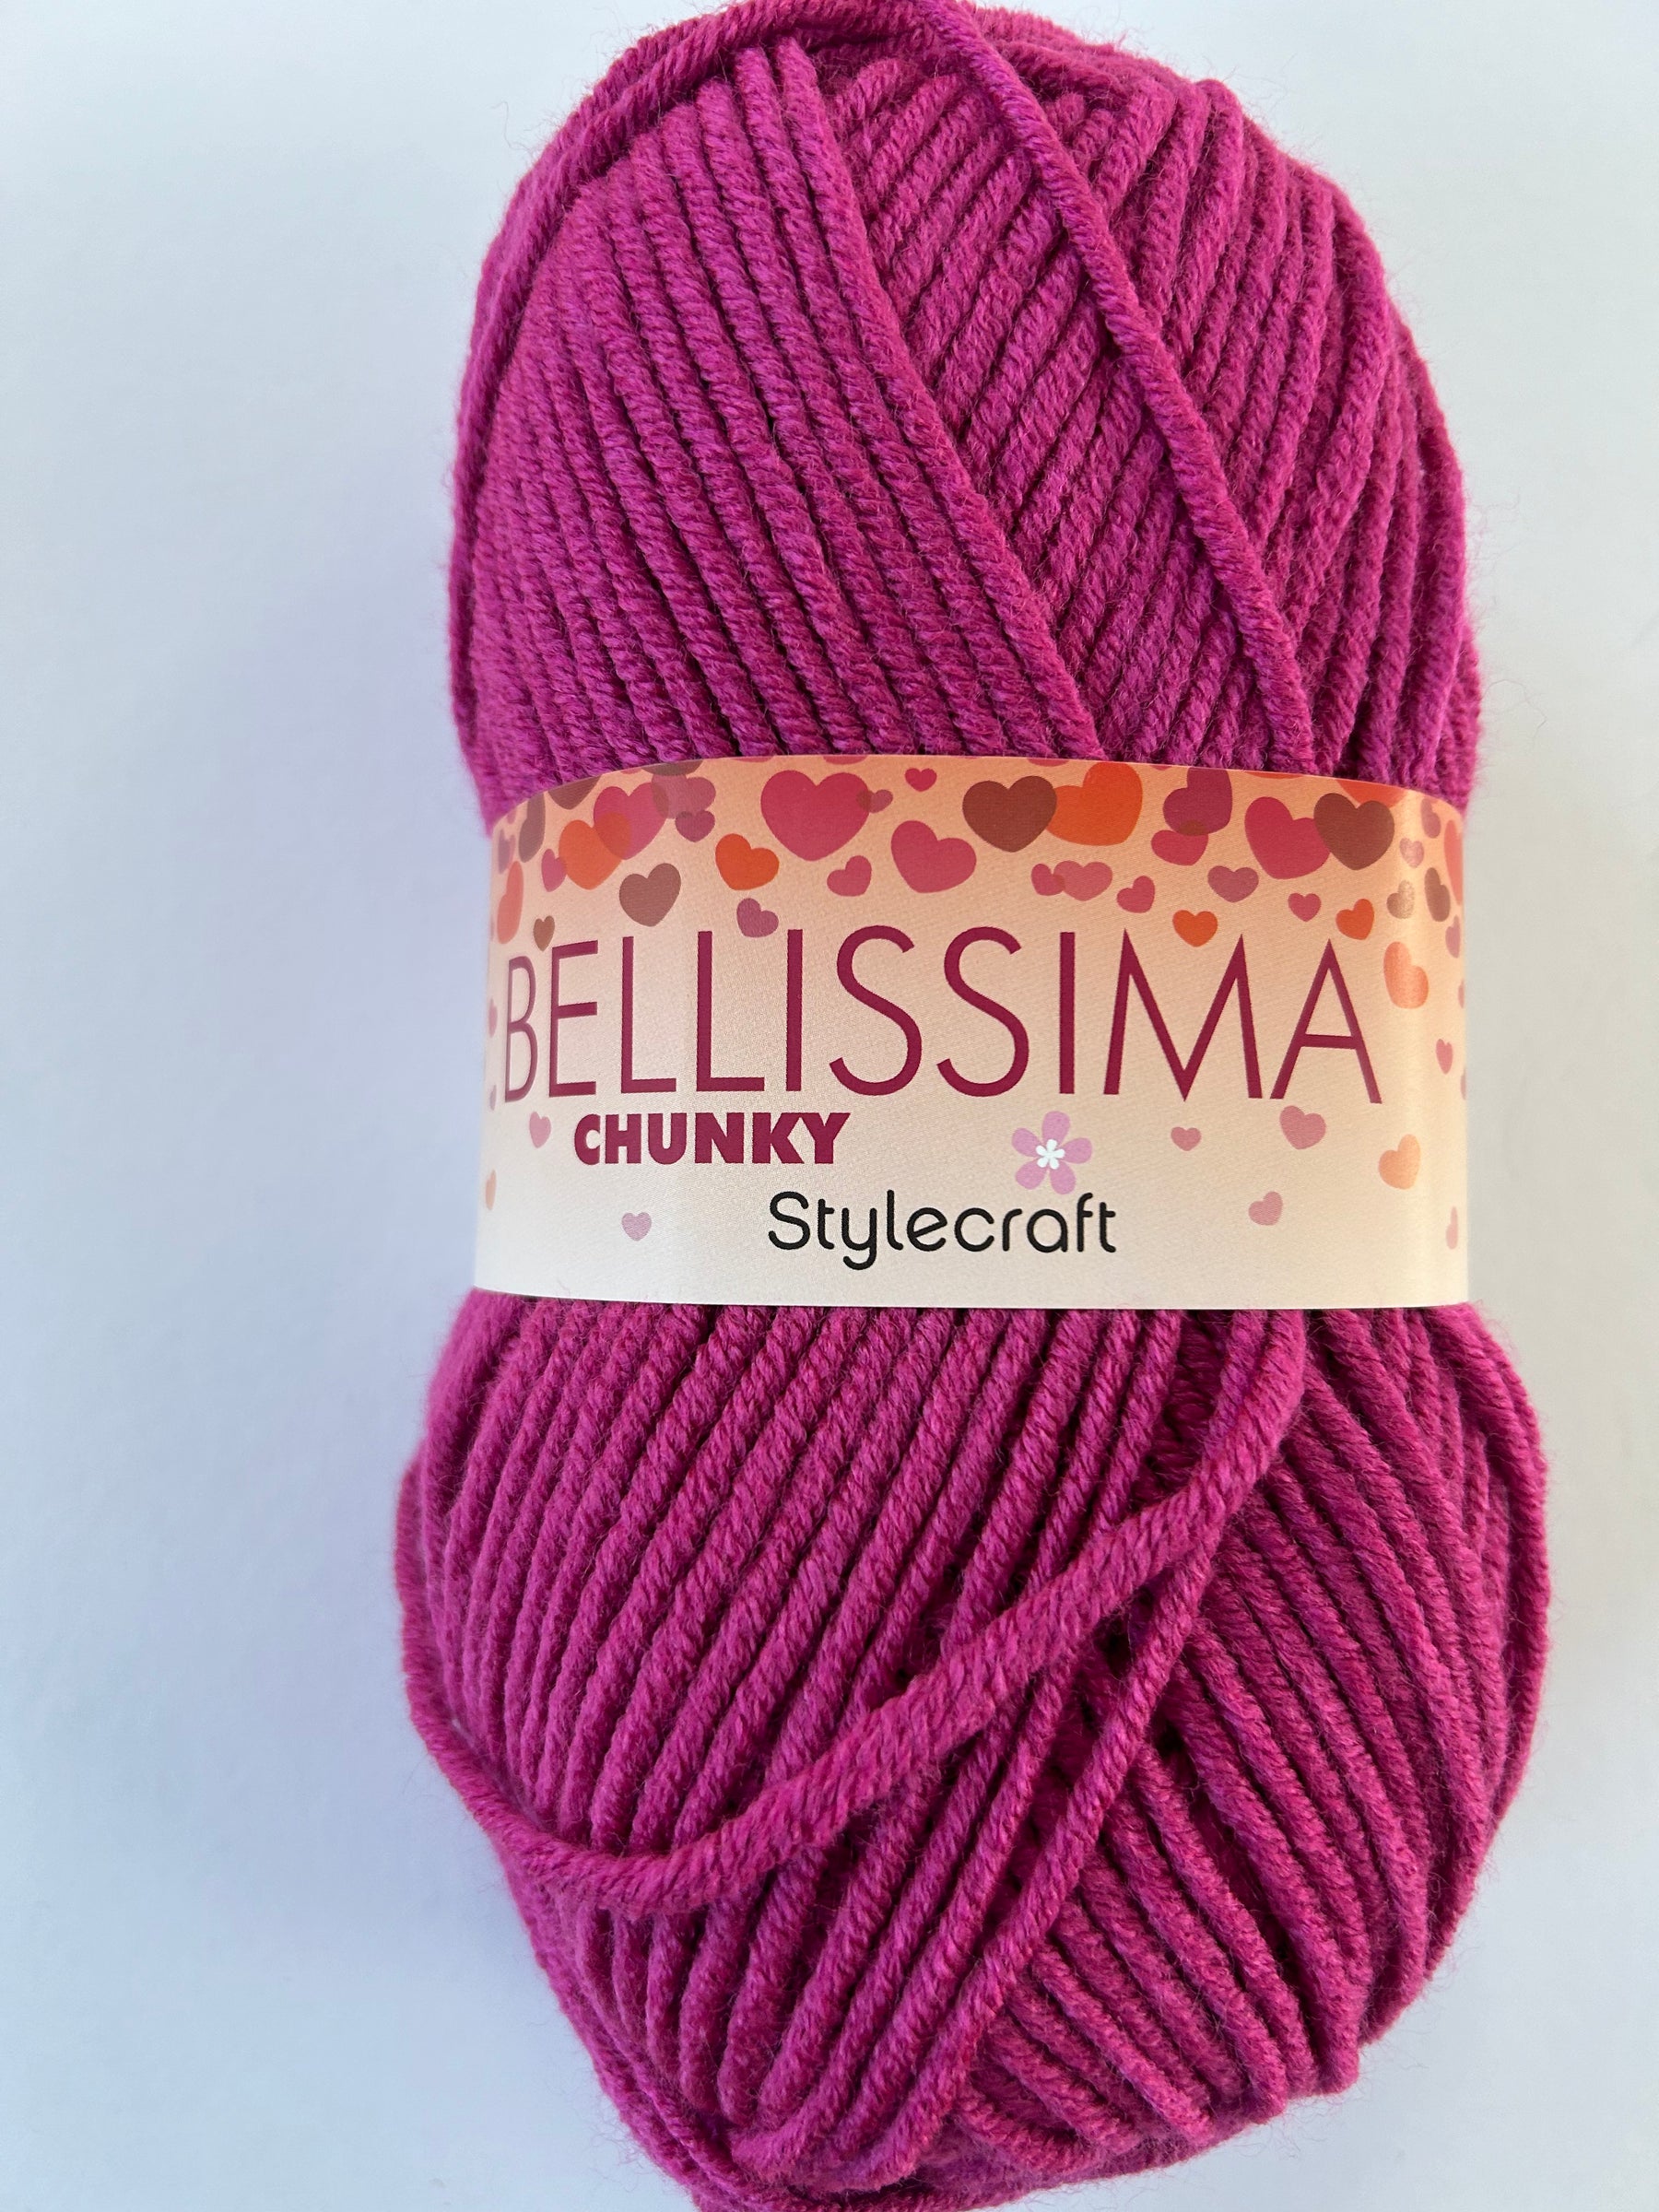 Stylecraft Bellissima Chunky Yarn